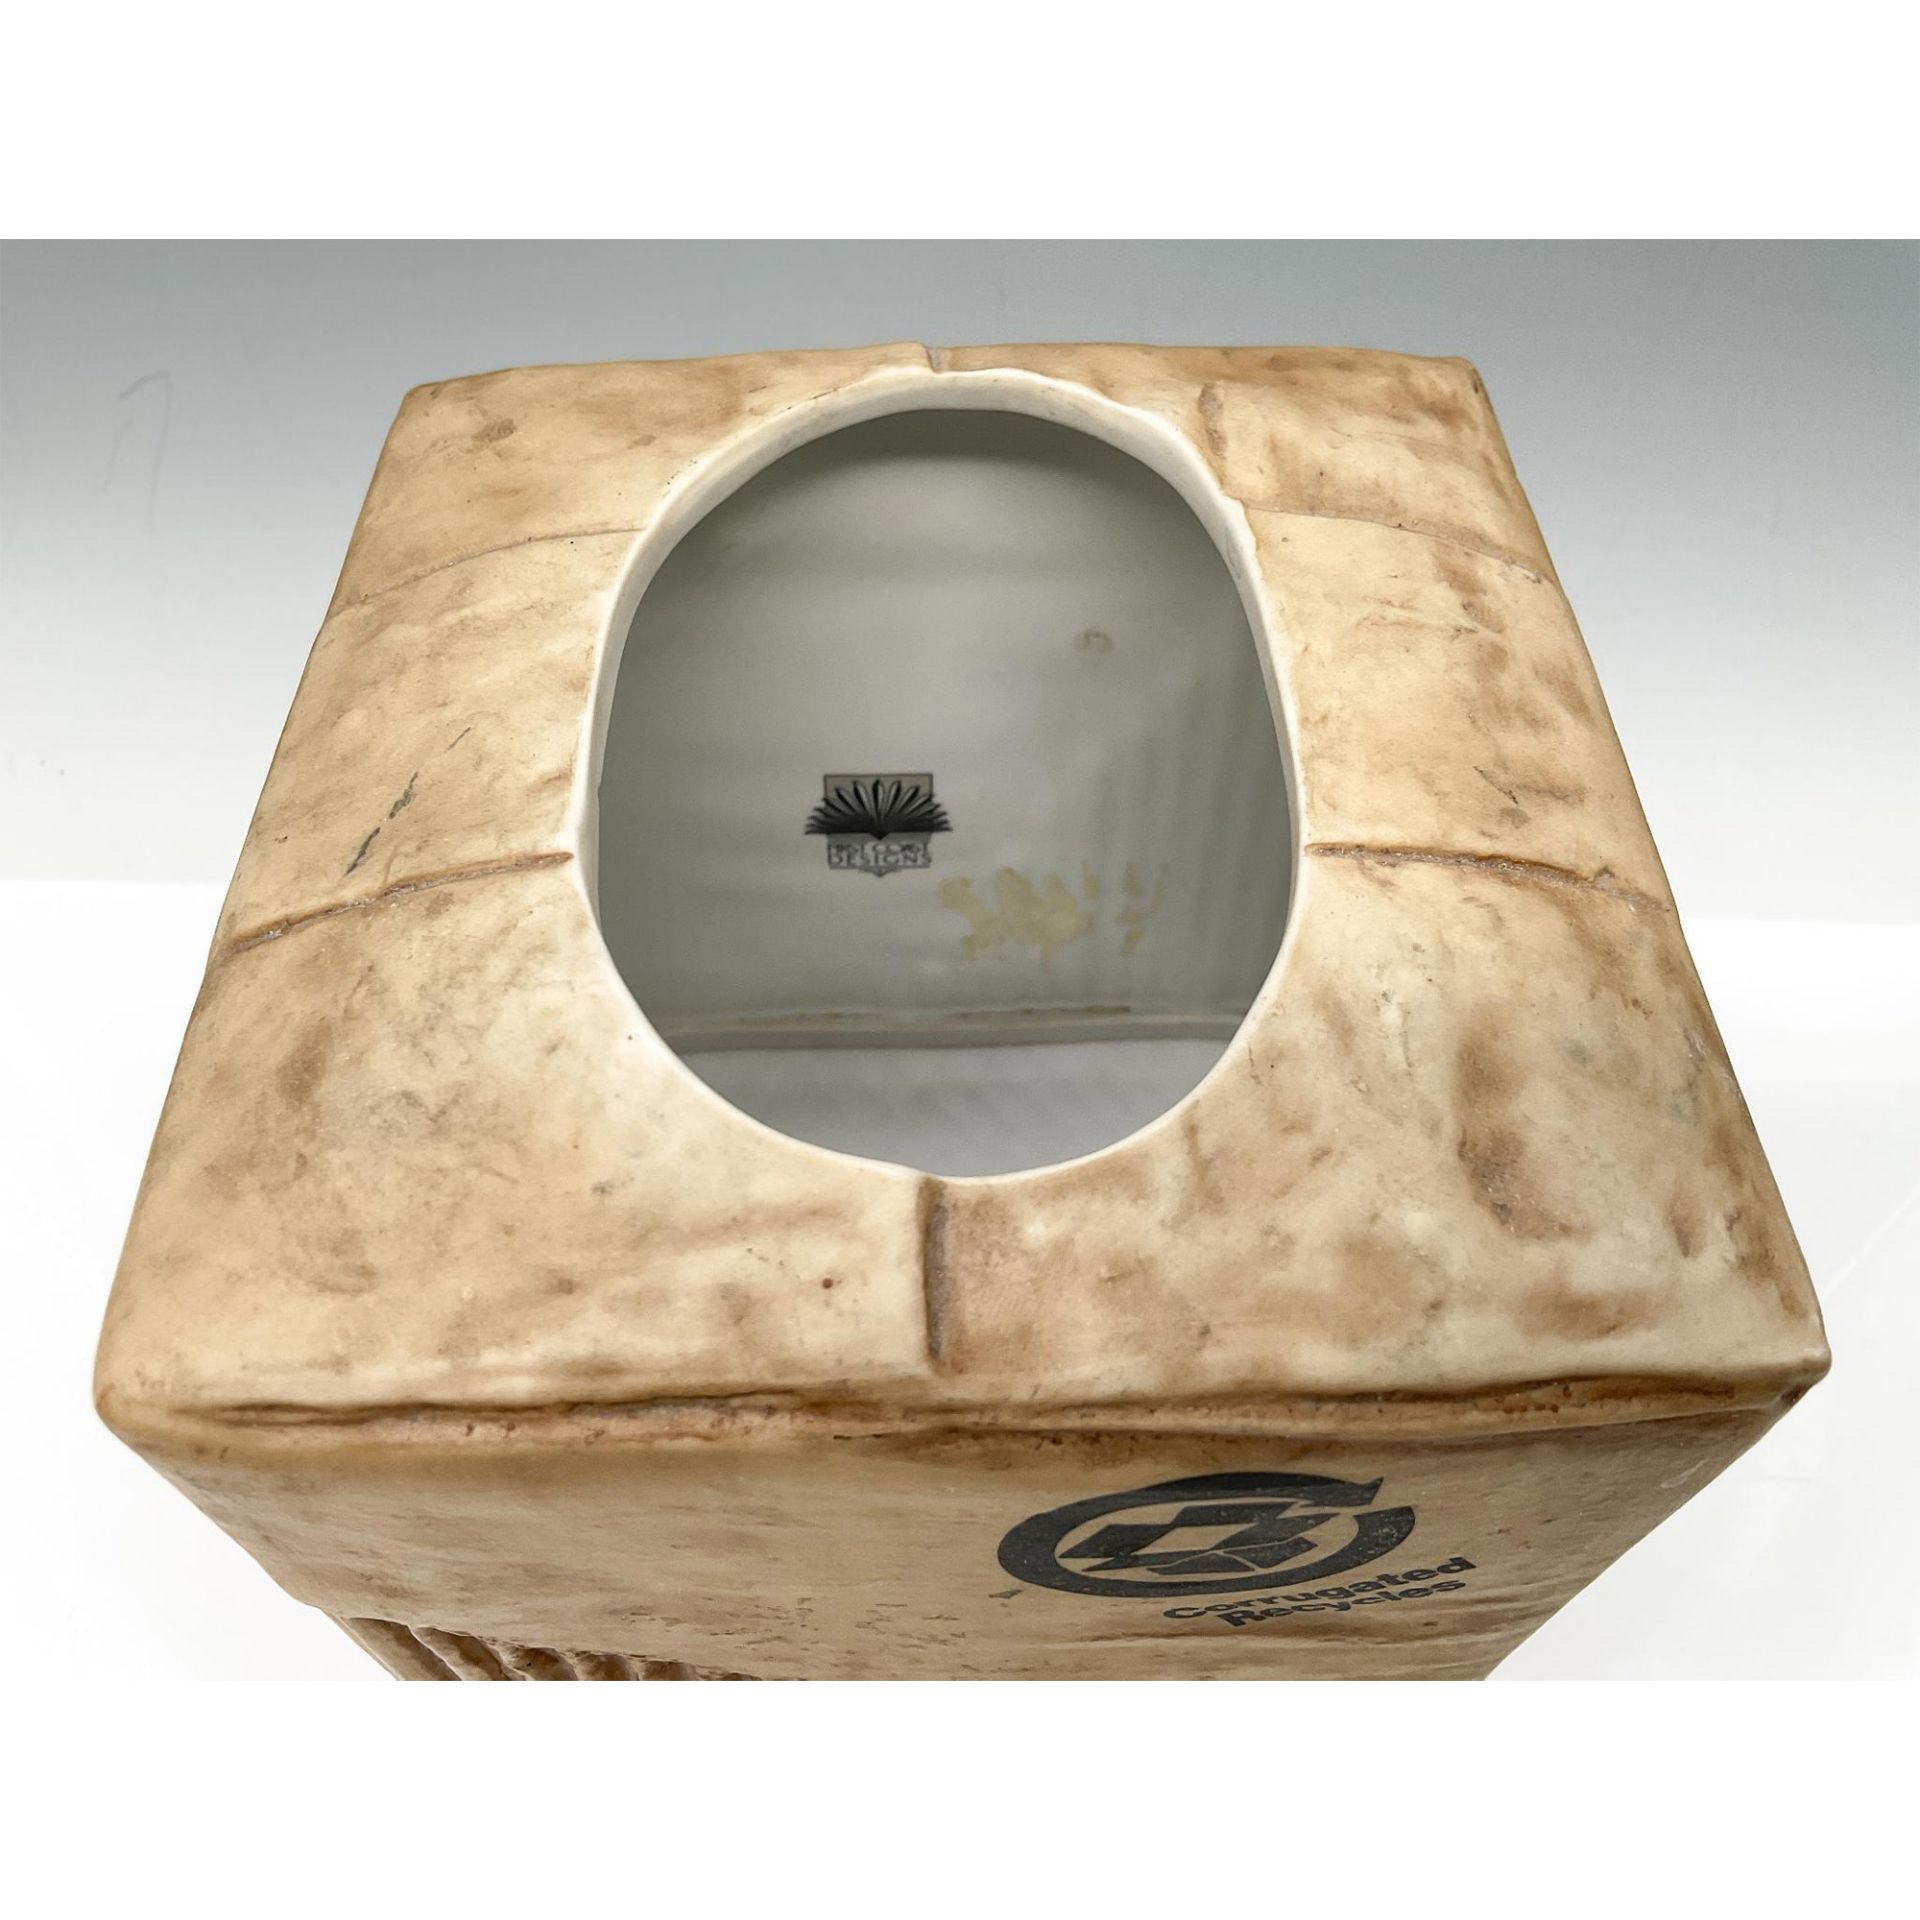 First Coast Designs Ceramic Tissue Box Holder - Image 4 of 4